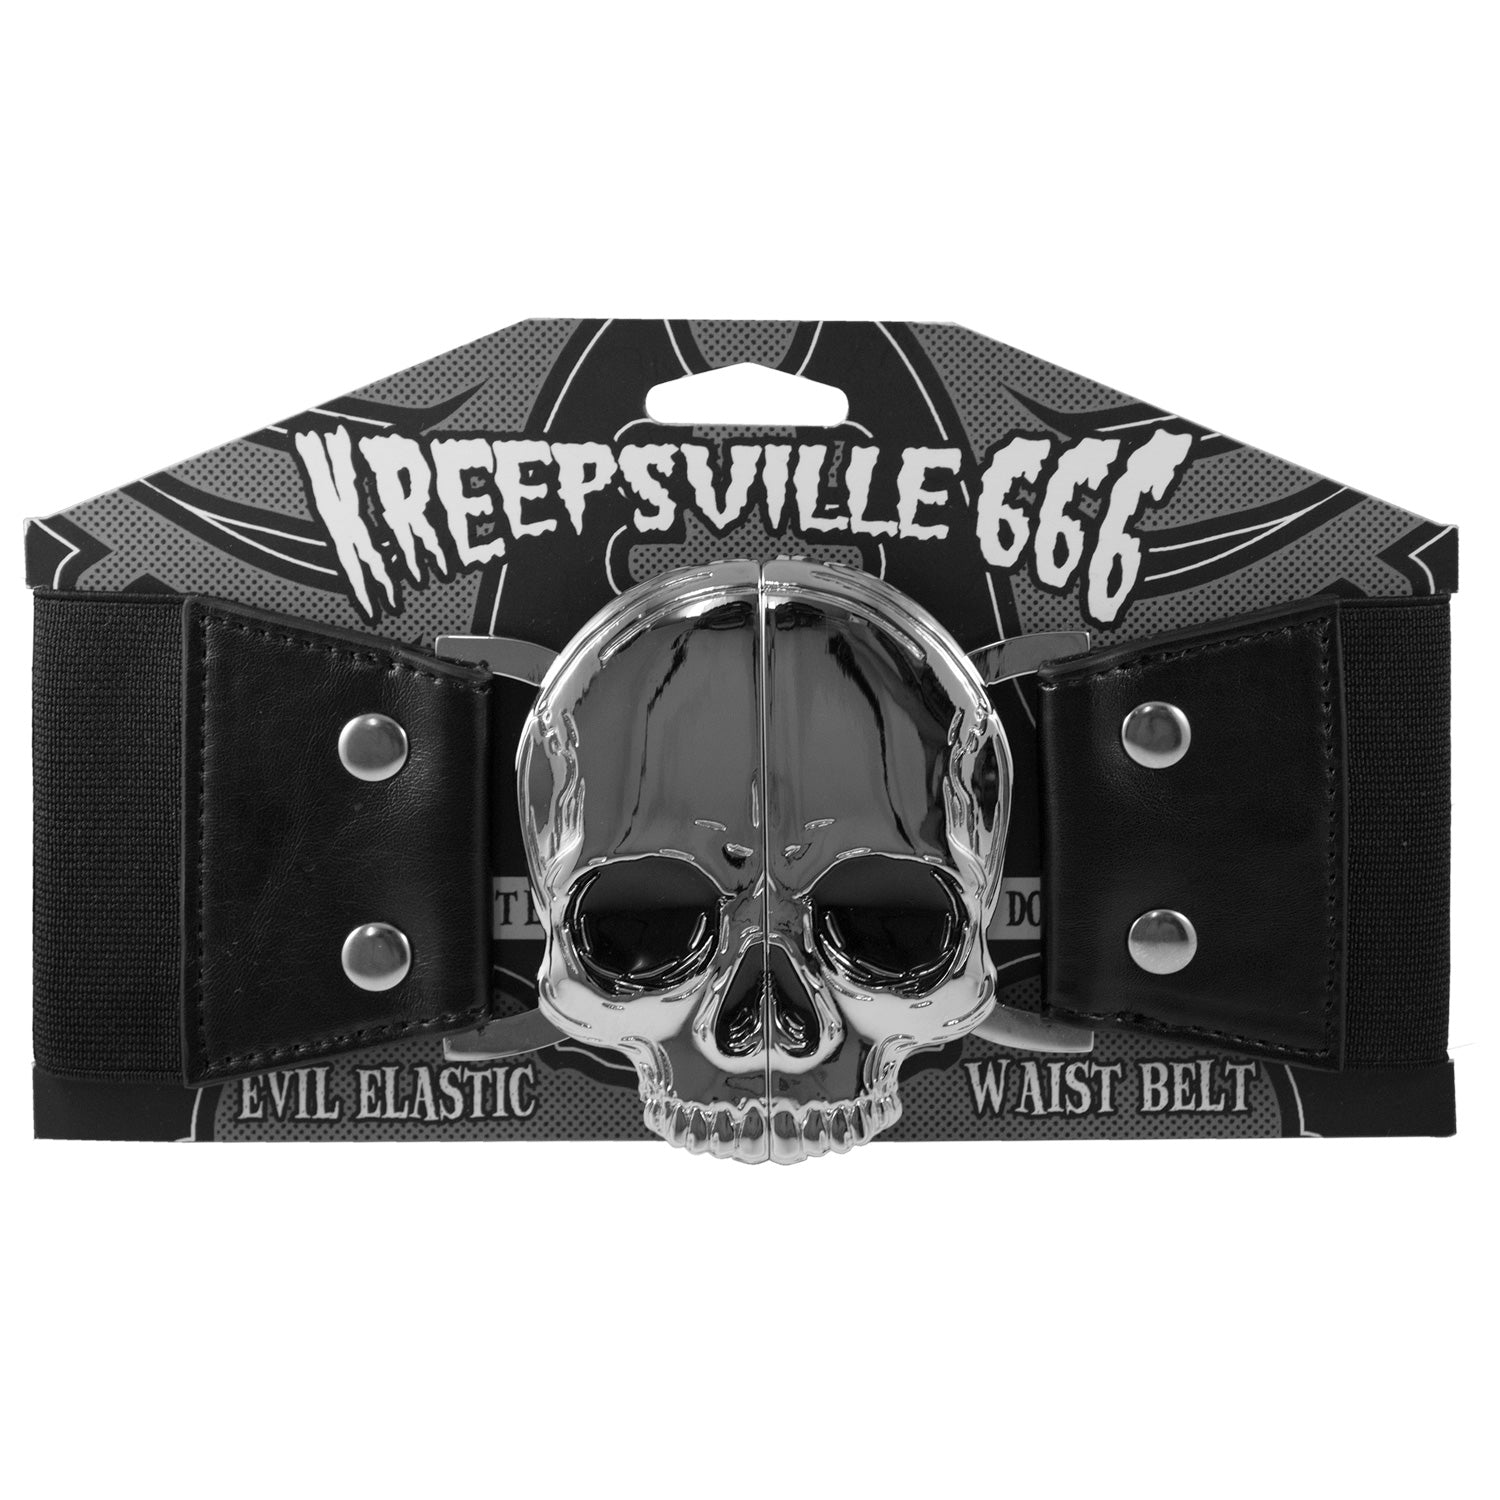 Kreepsville 666 Elastic Waist Belt Skull Black